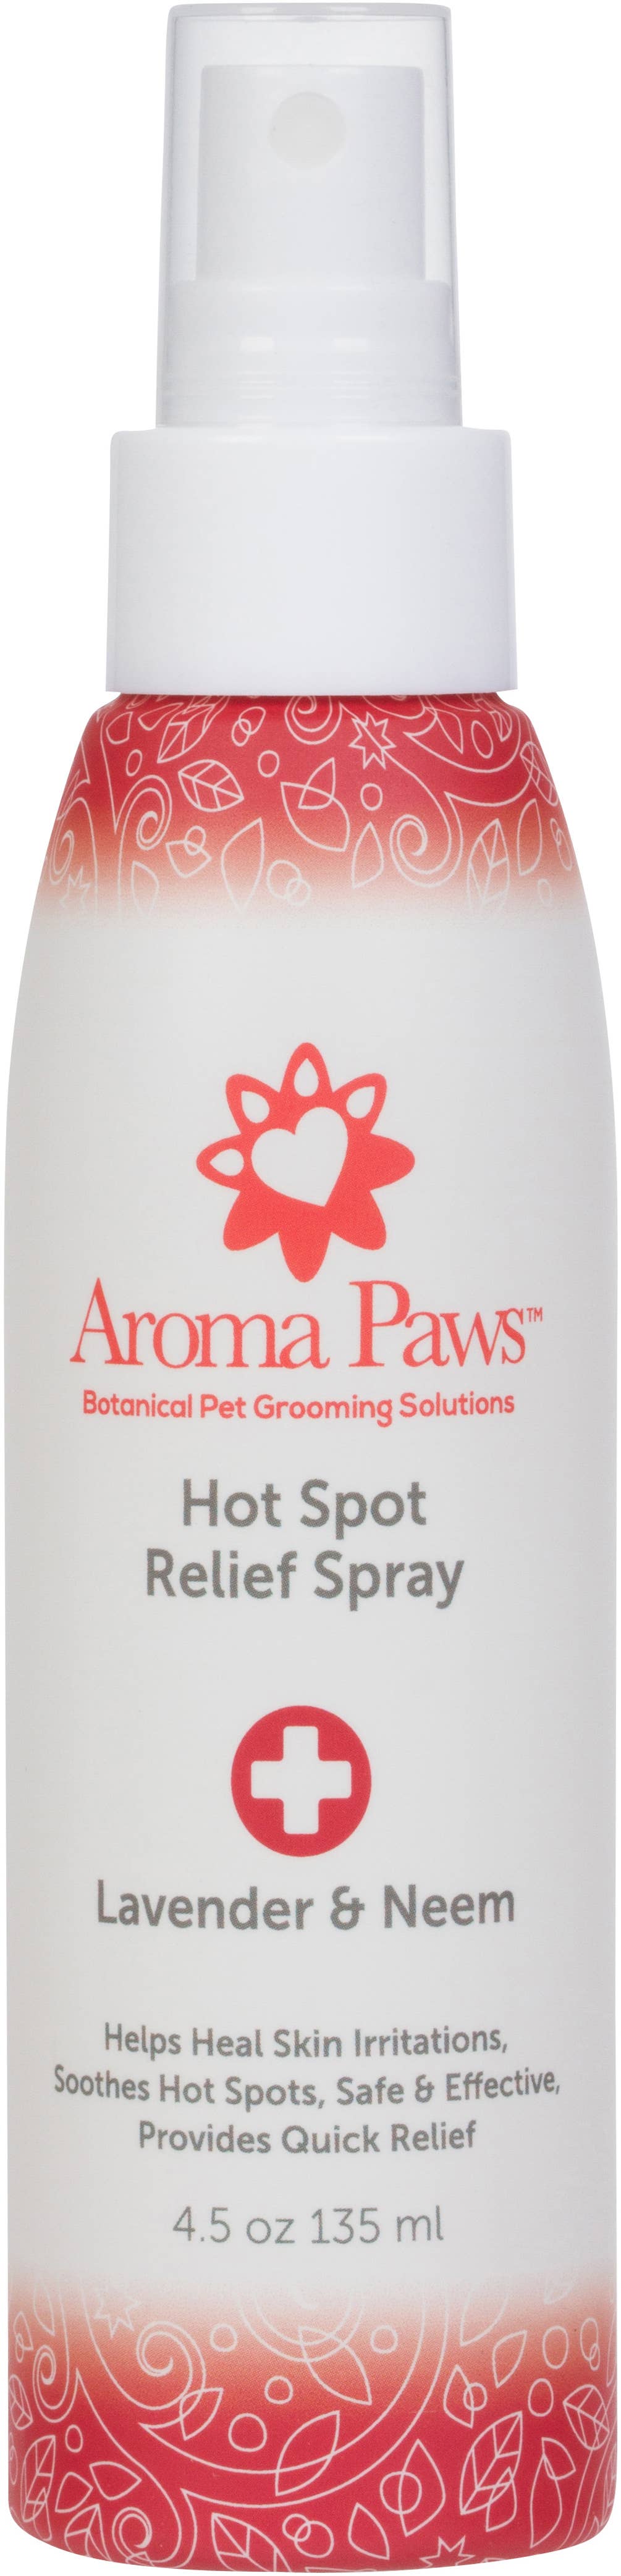 Aroma Paws Hot Spot Relief Spray 4.5 oz